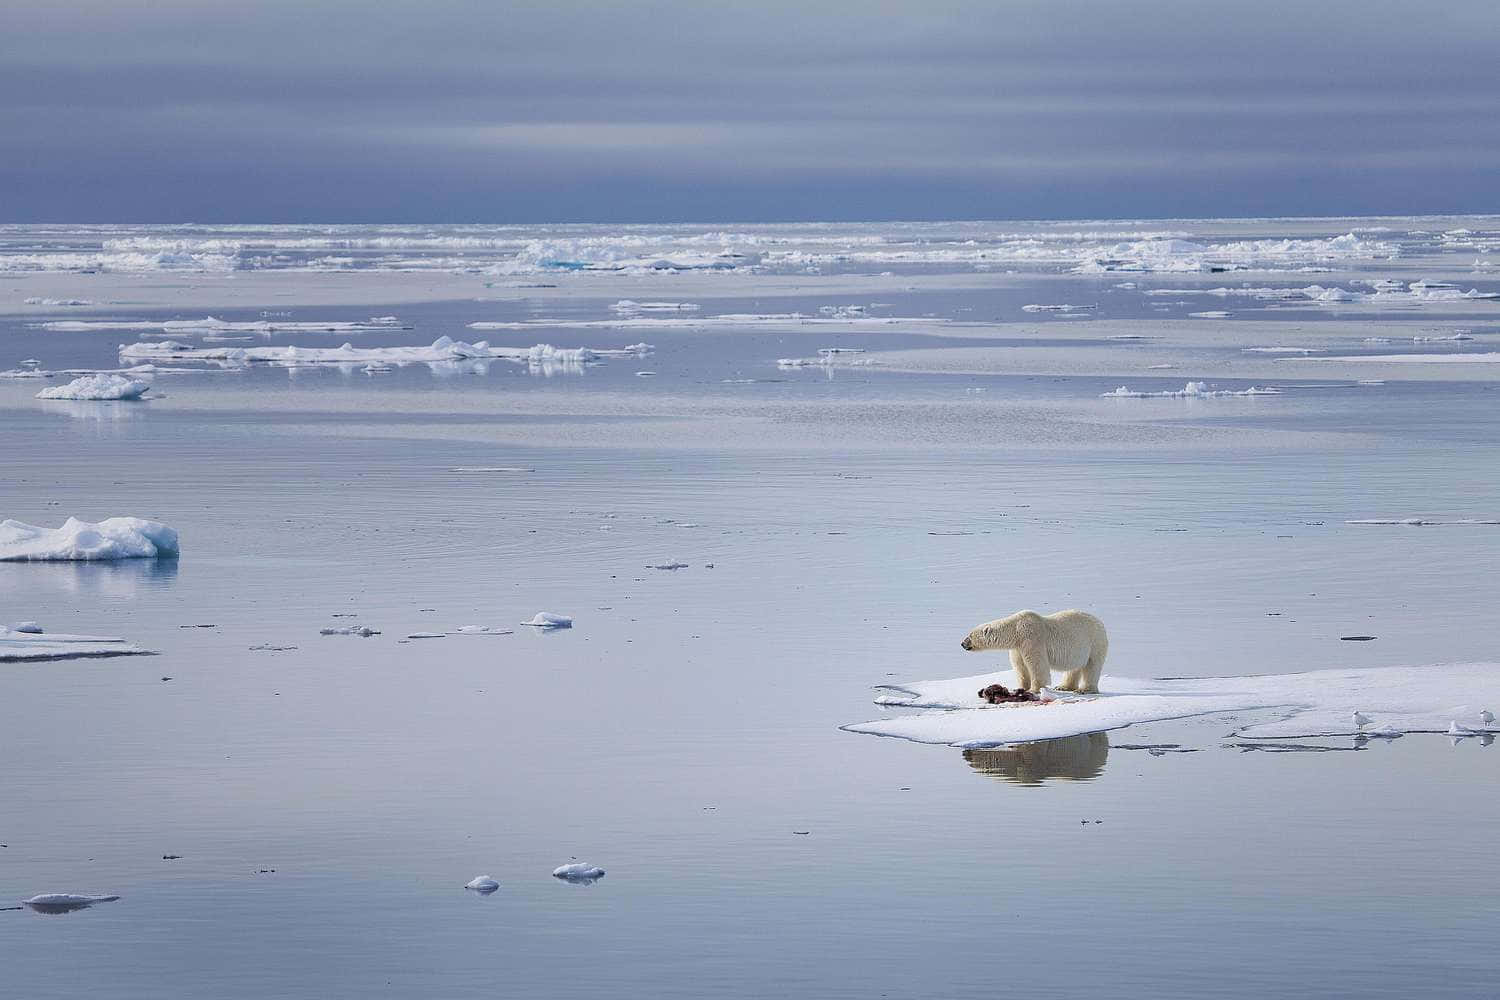 Polar Bears In The Arctic